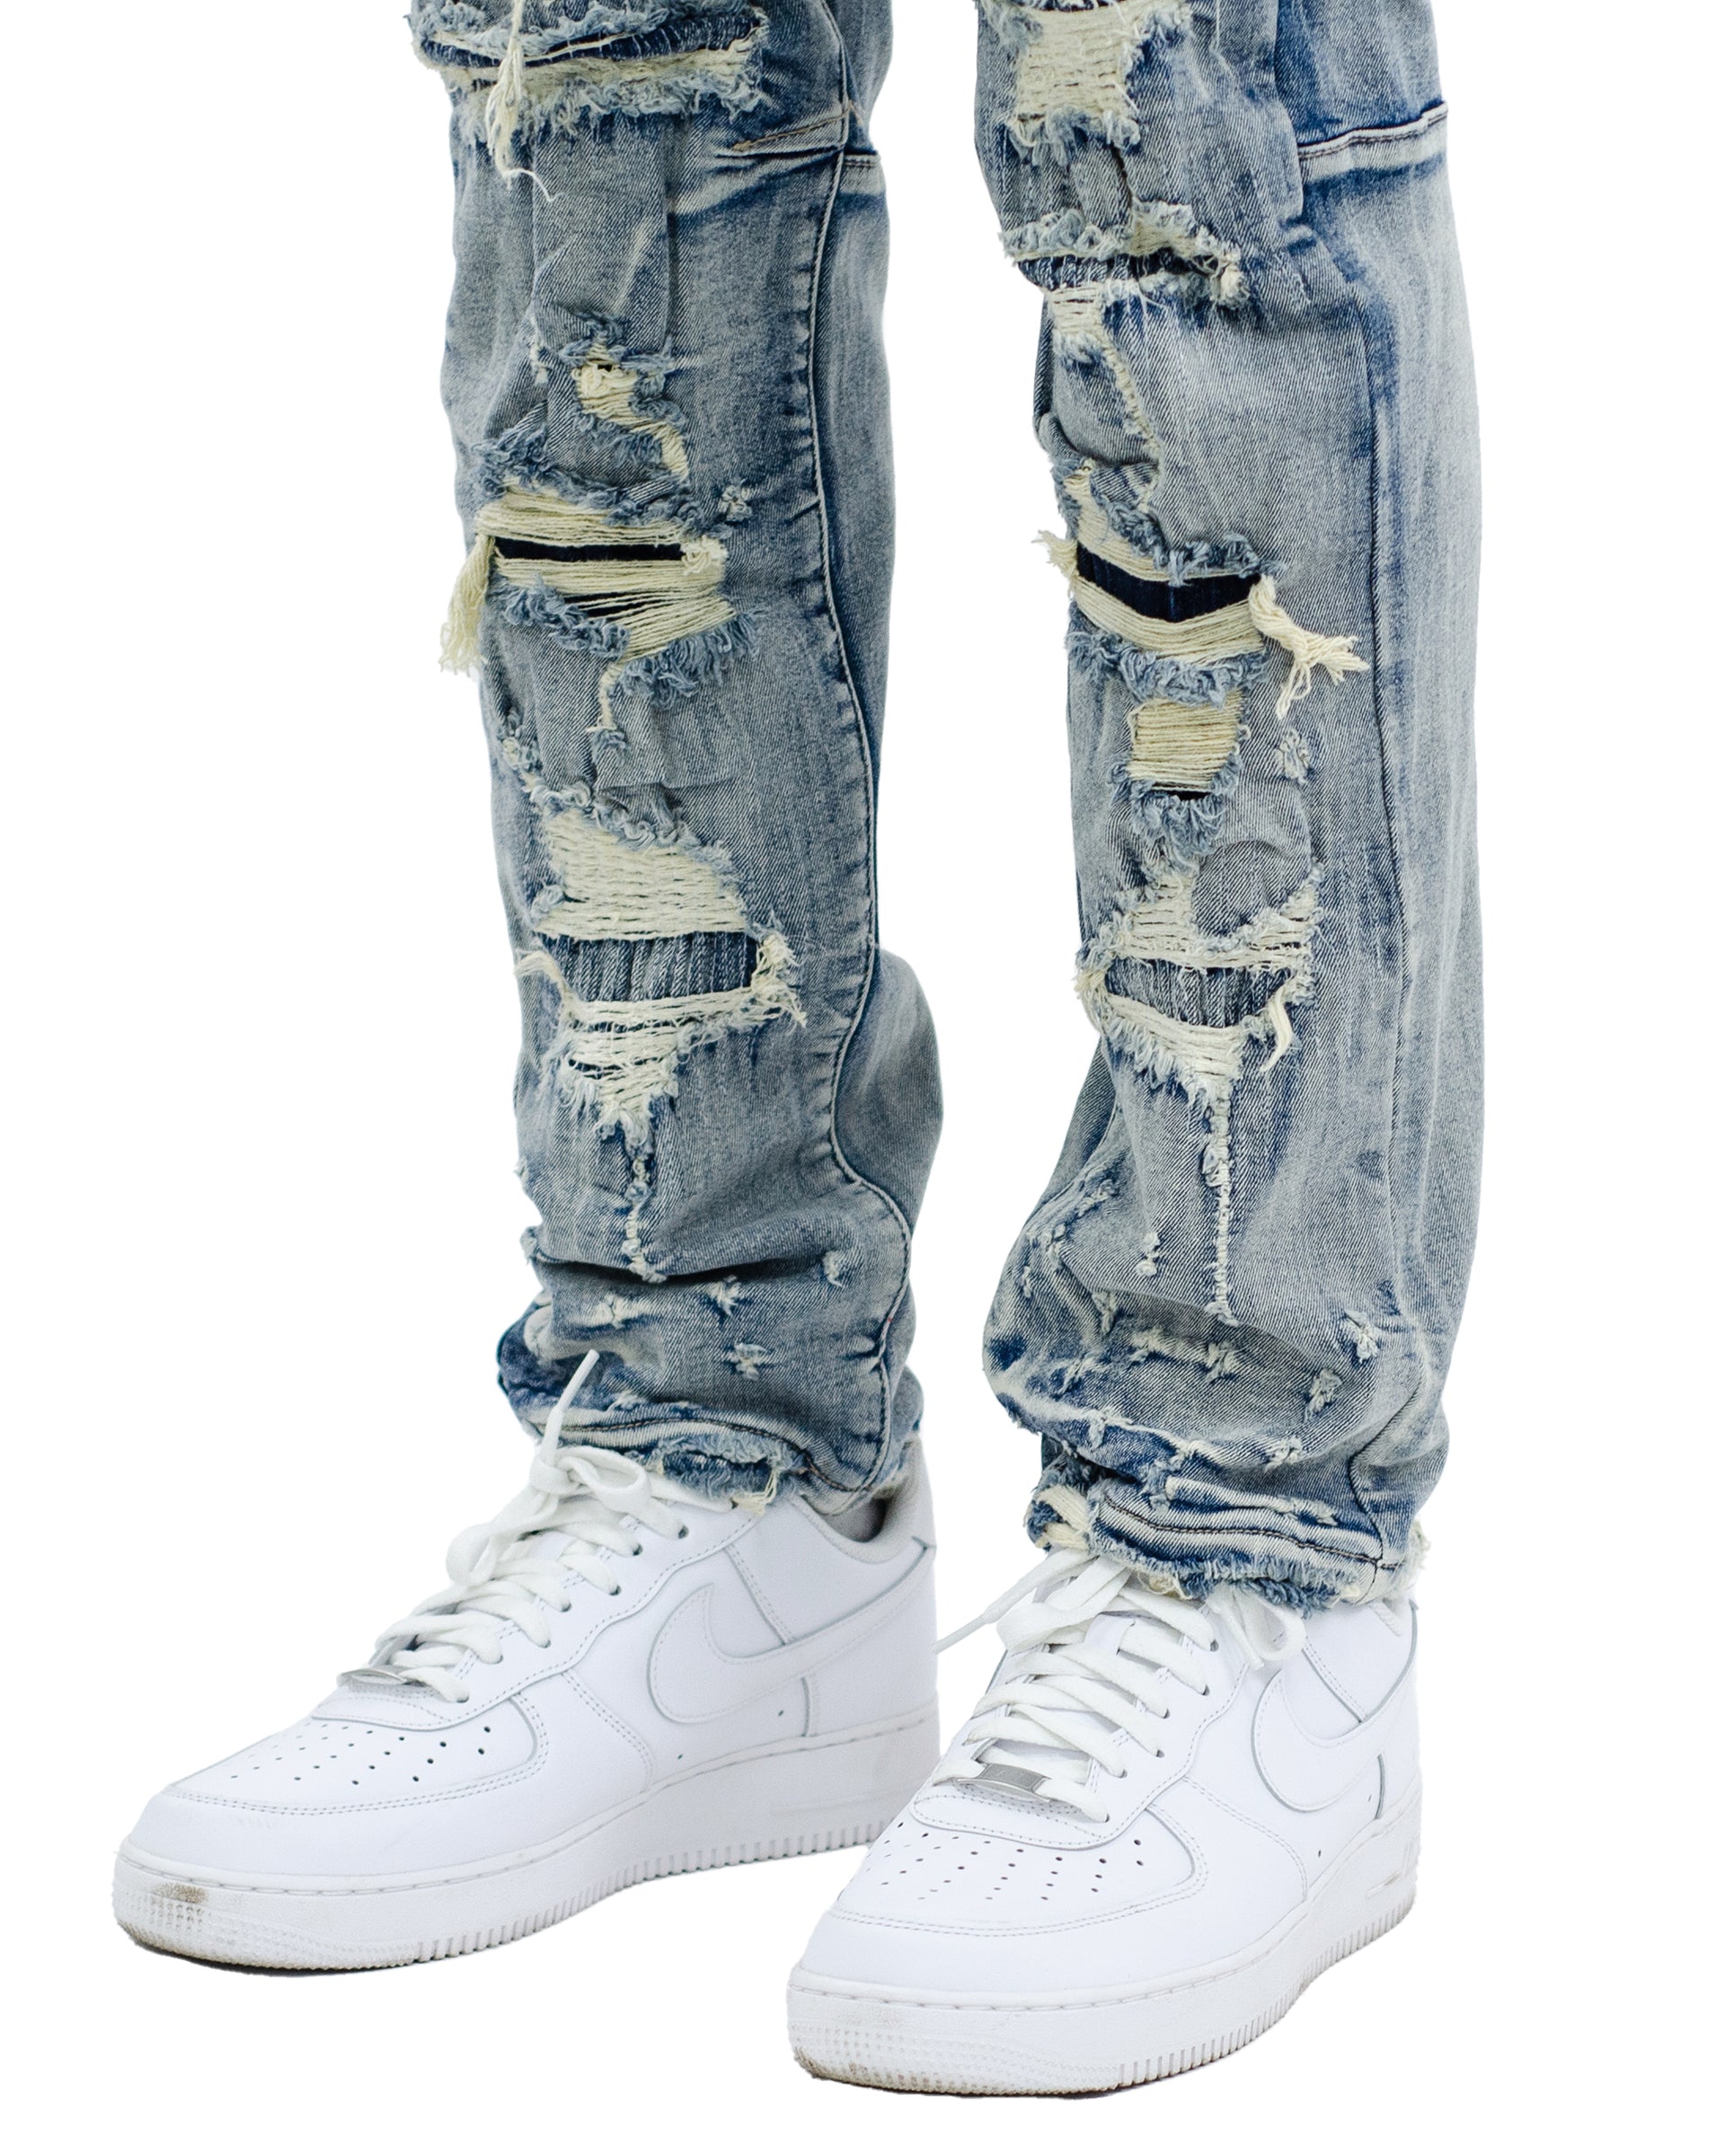 WRIGLEY | Rip Torn Destroyed Skinny Denim Jeans in Aspen Blue